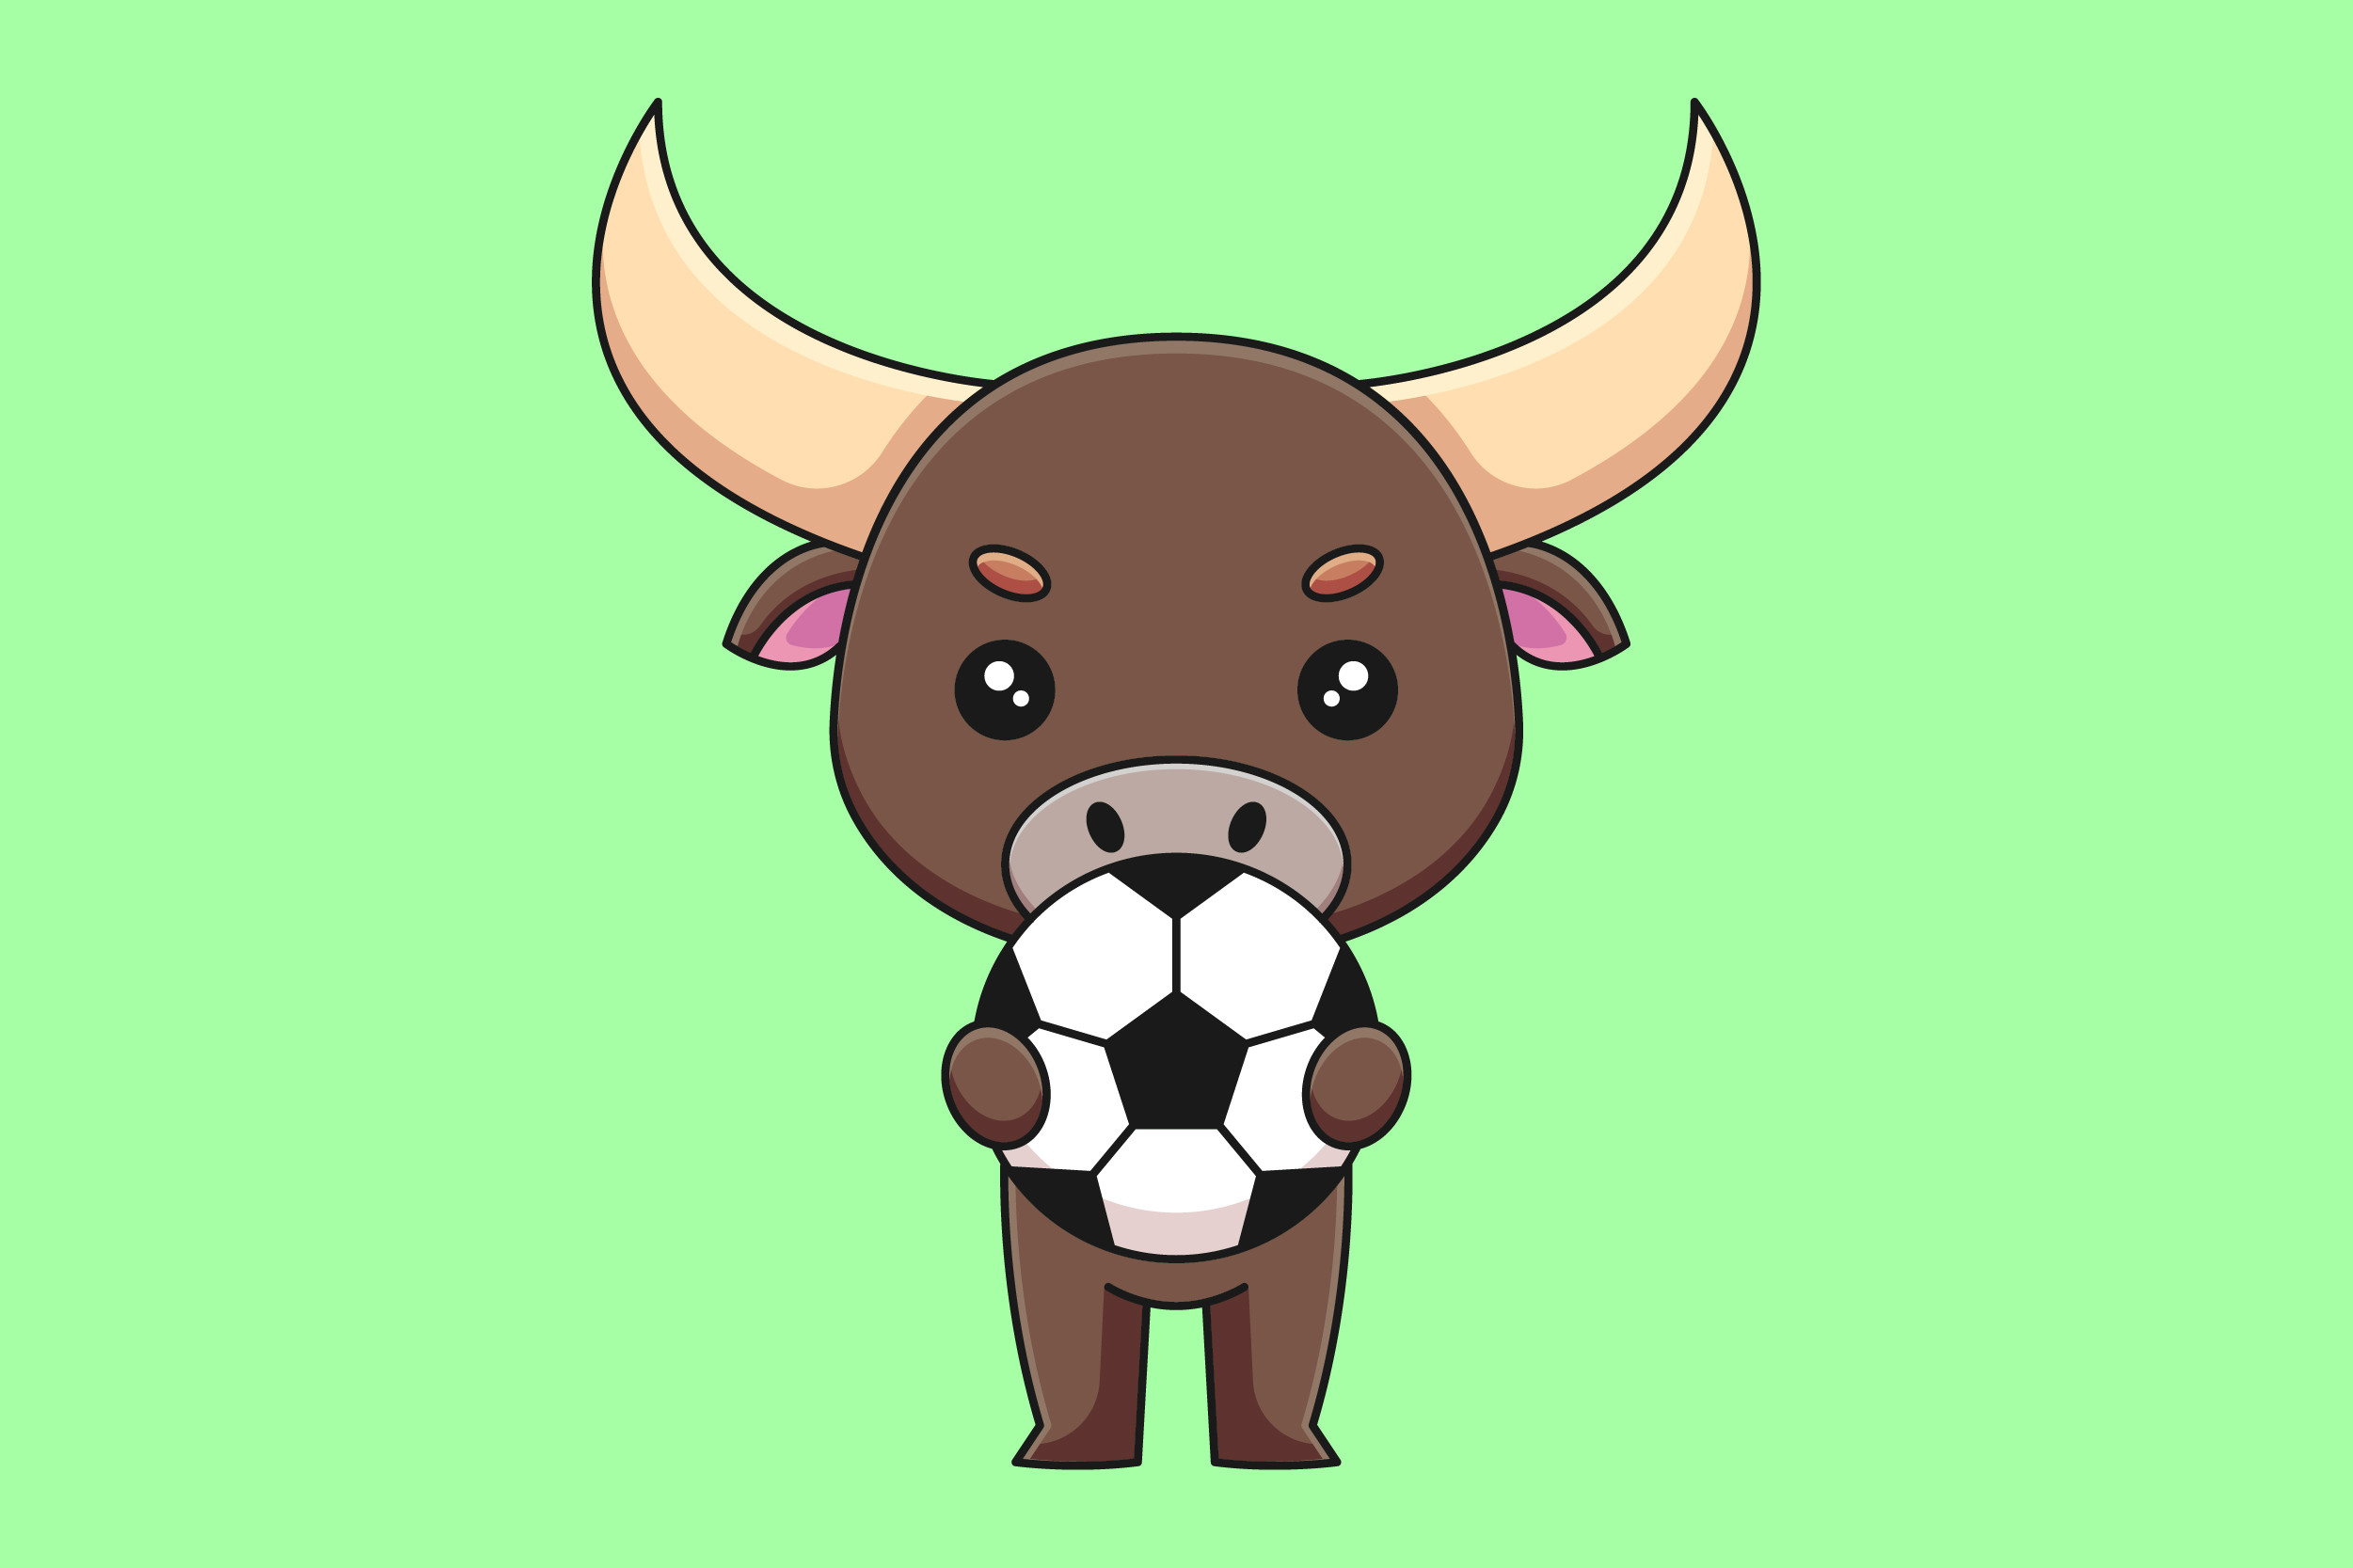 Cute Bull Holding Soccer Ball Cartoon Graphic by Artcuboy · Creative ...